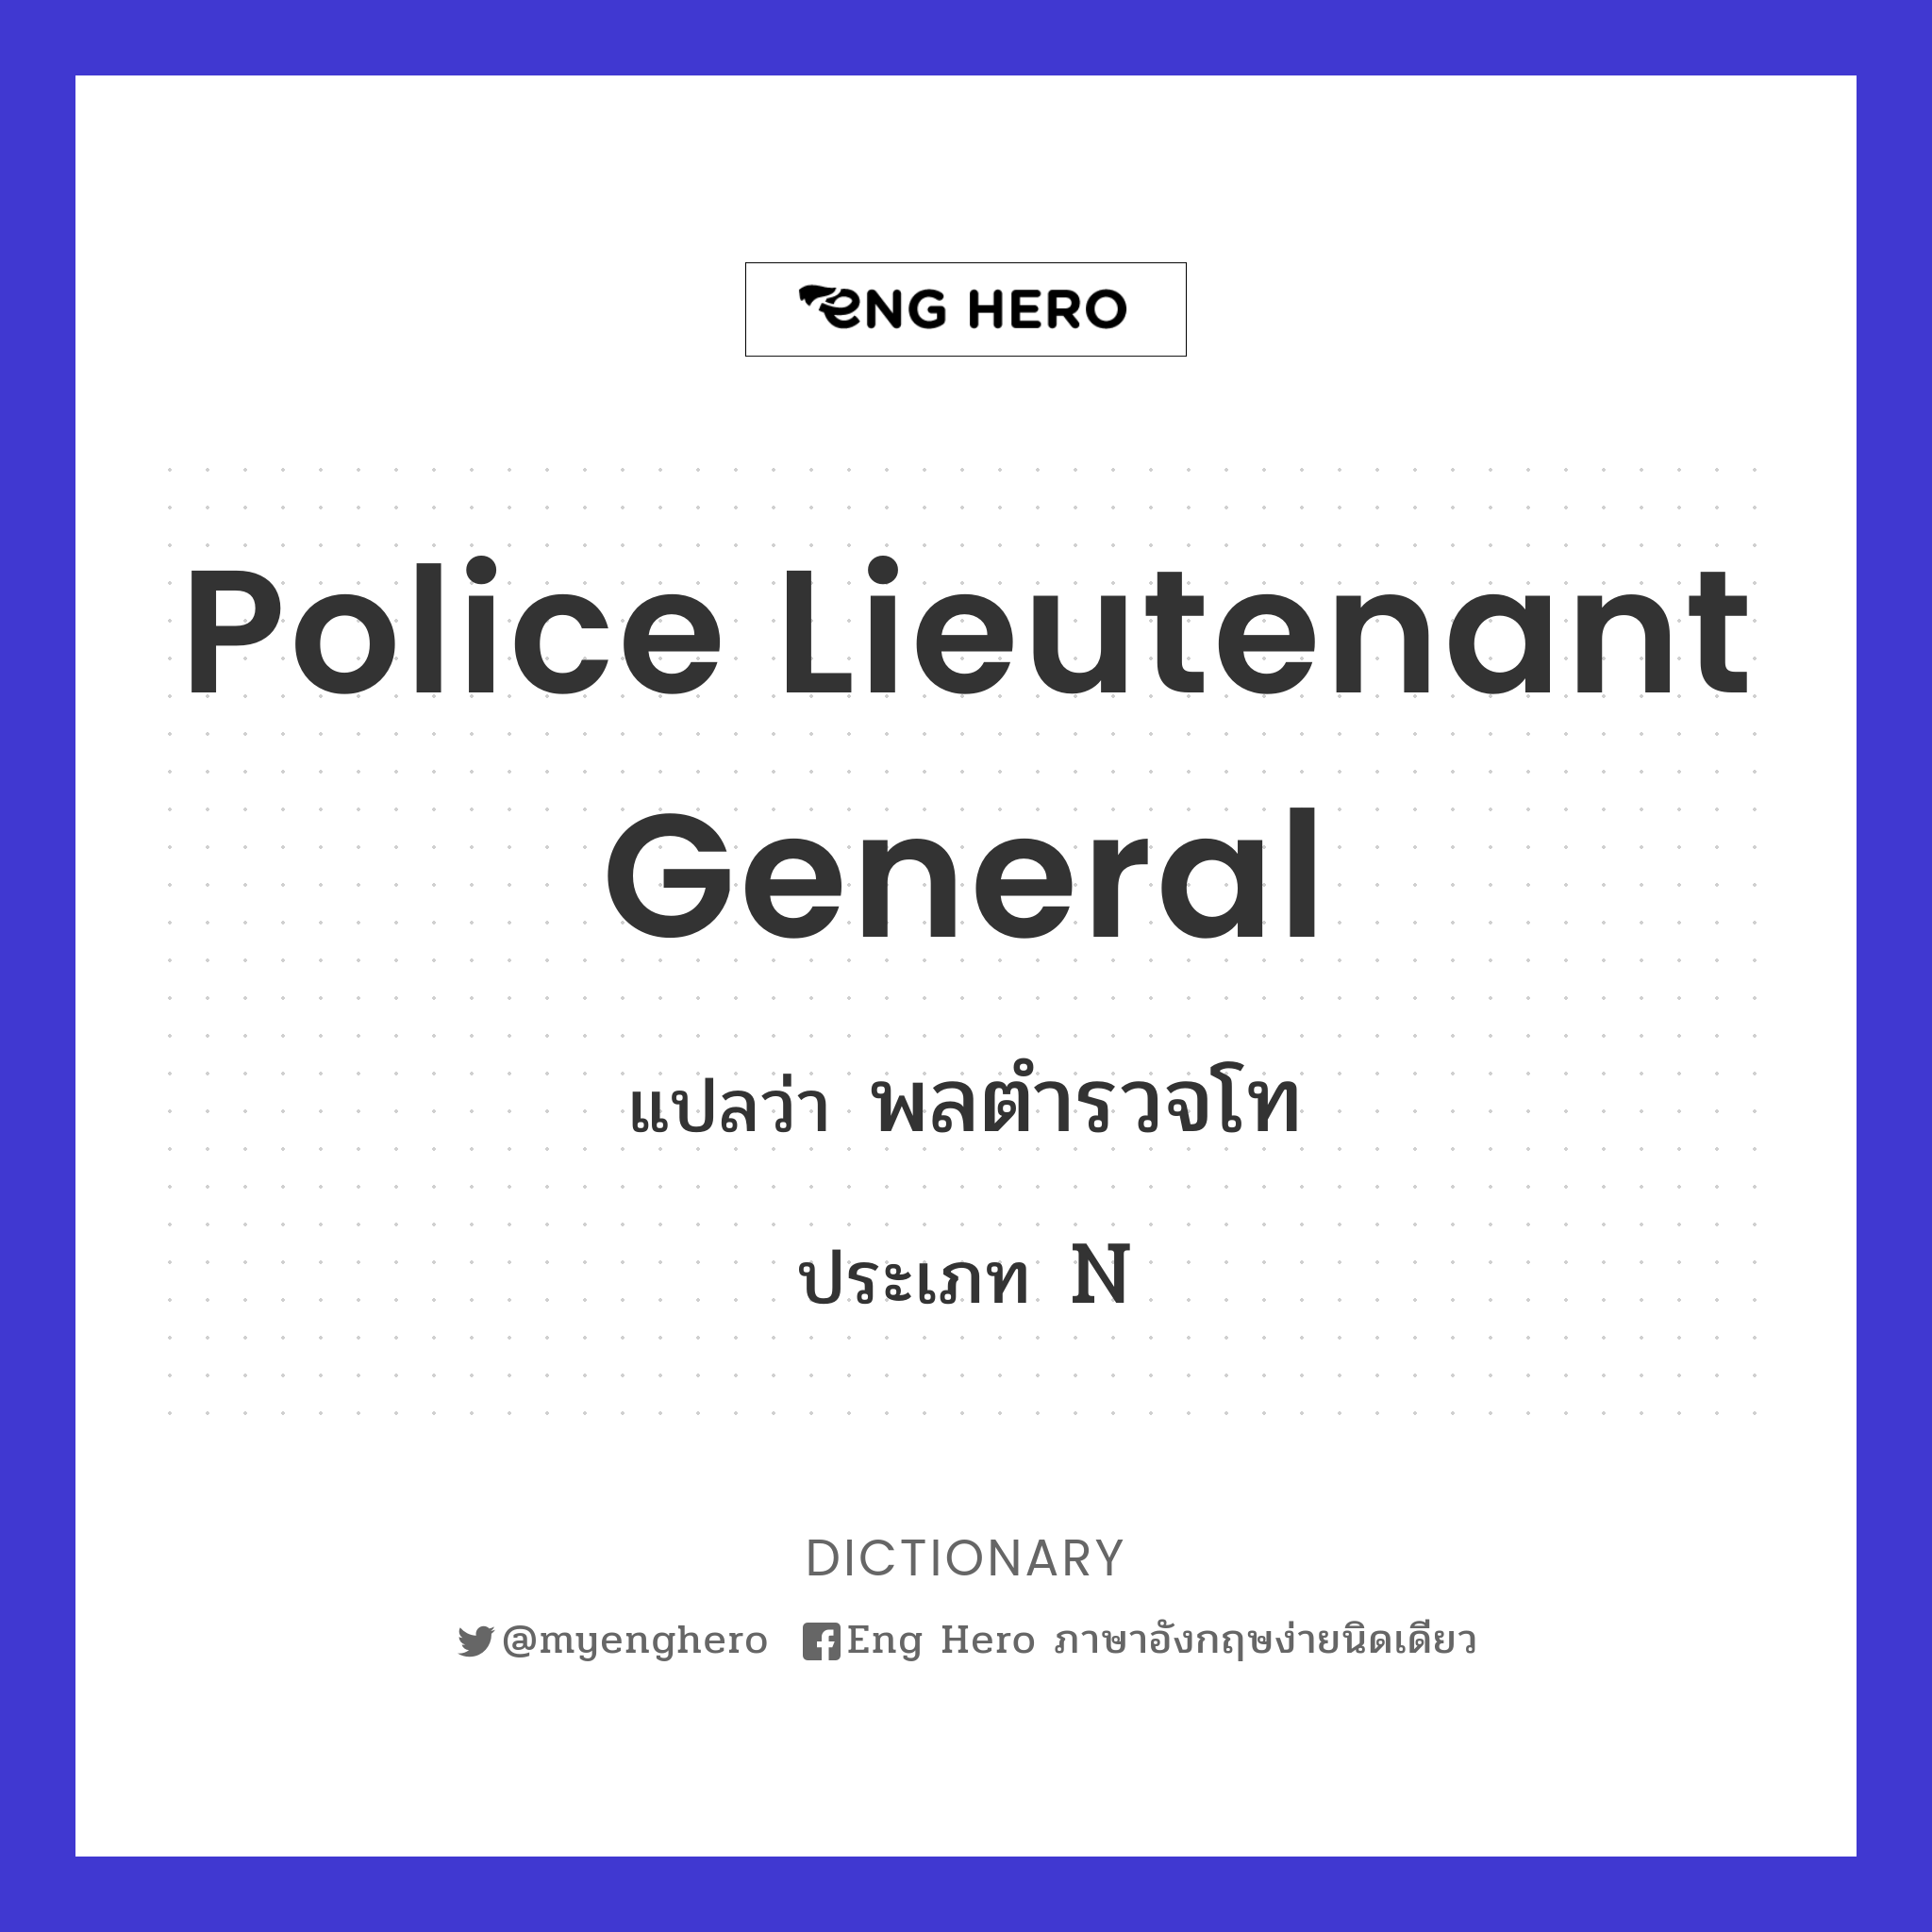 Police Lieutenant General